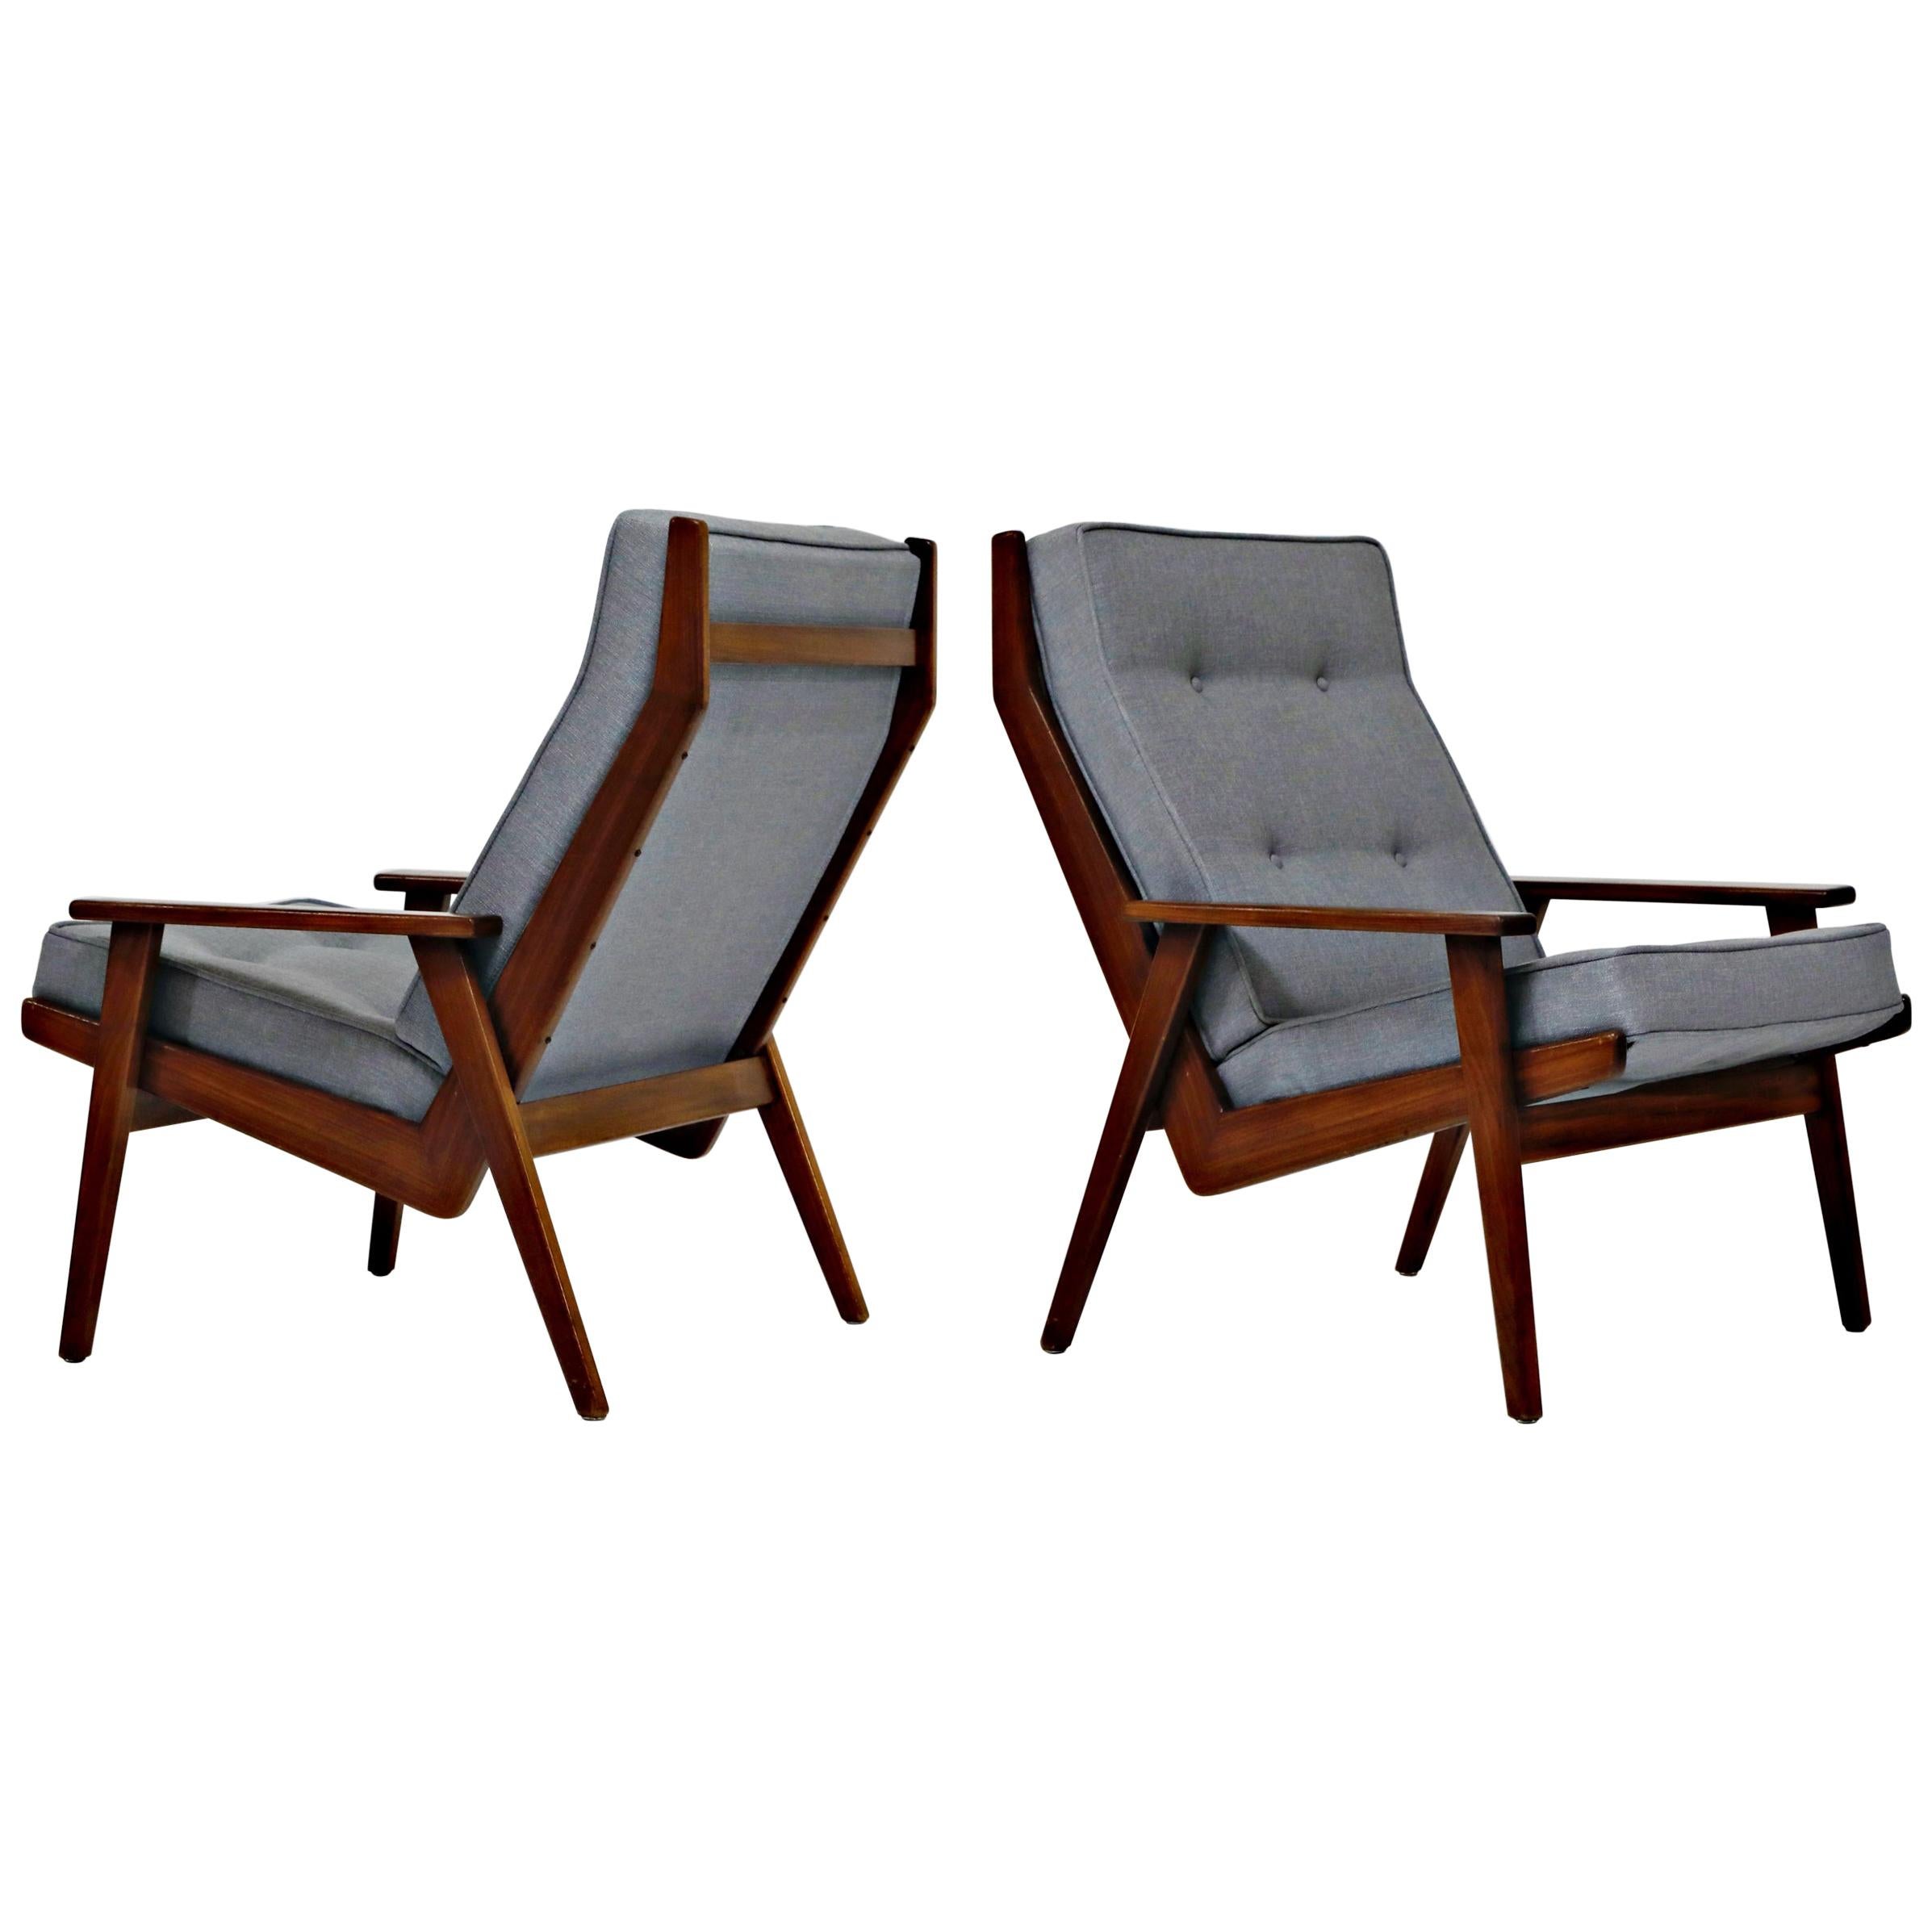 Pair of Lotus Chairs by Robert Parry for Gelderland, Denmark 1950s, Restored